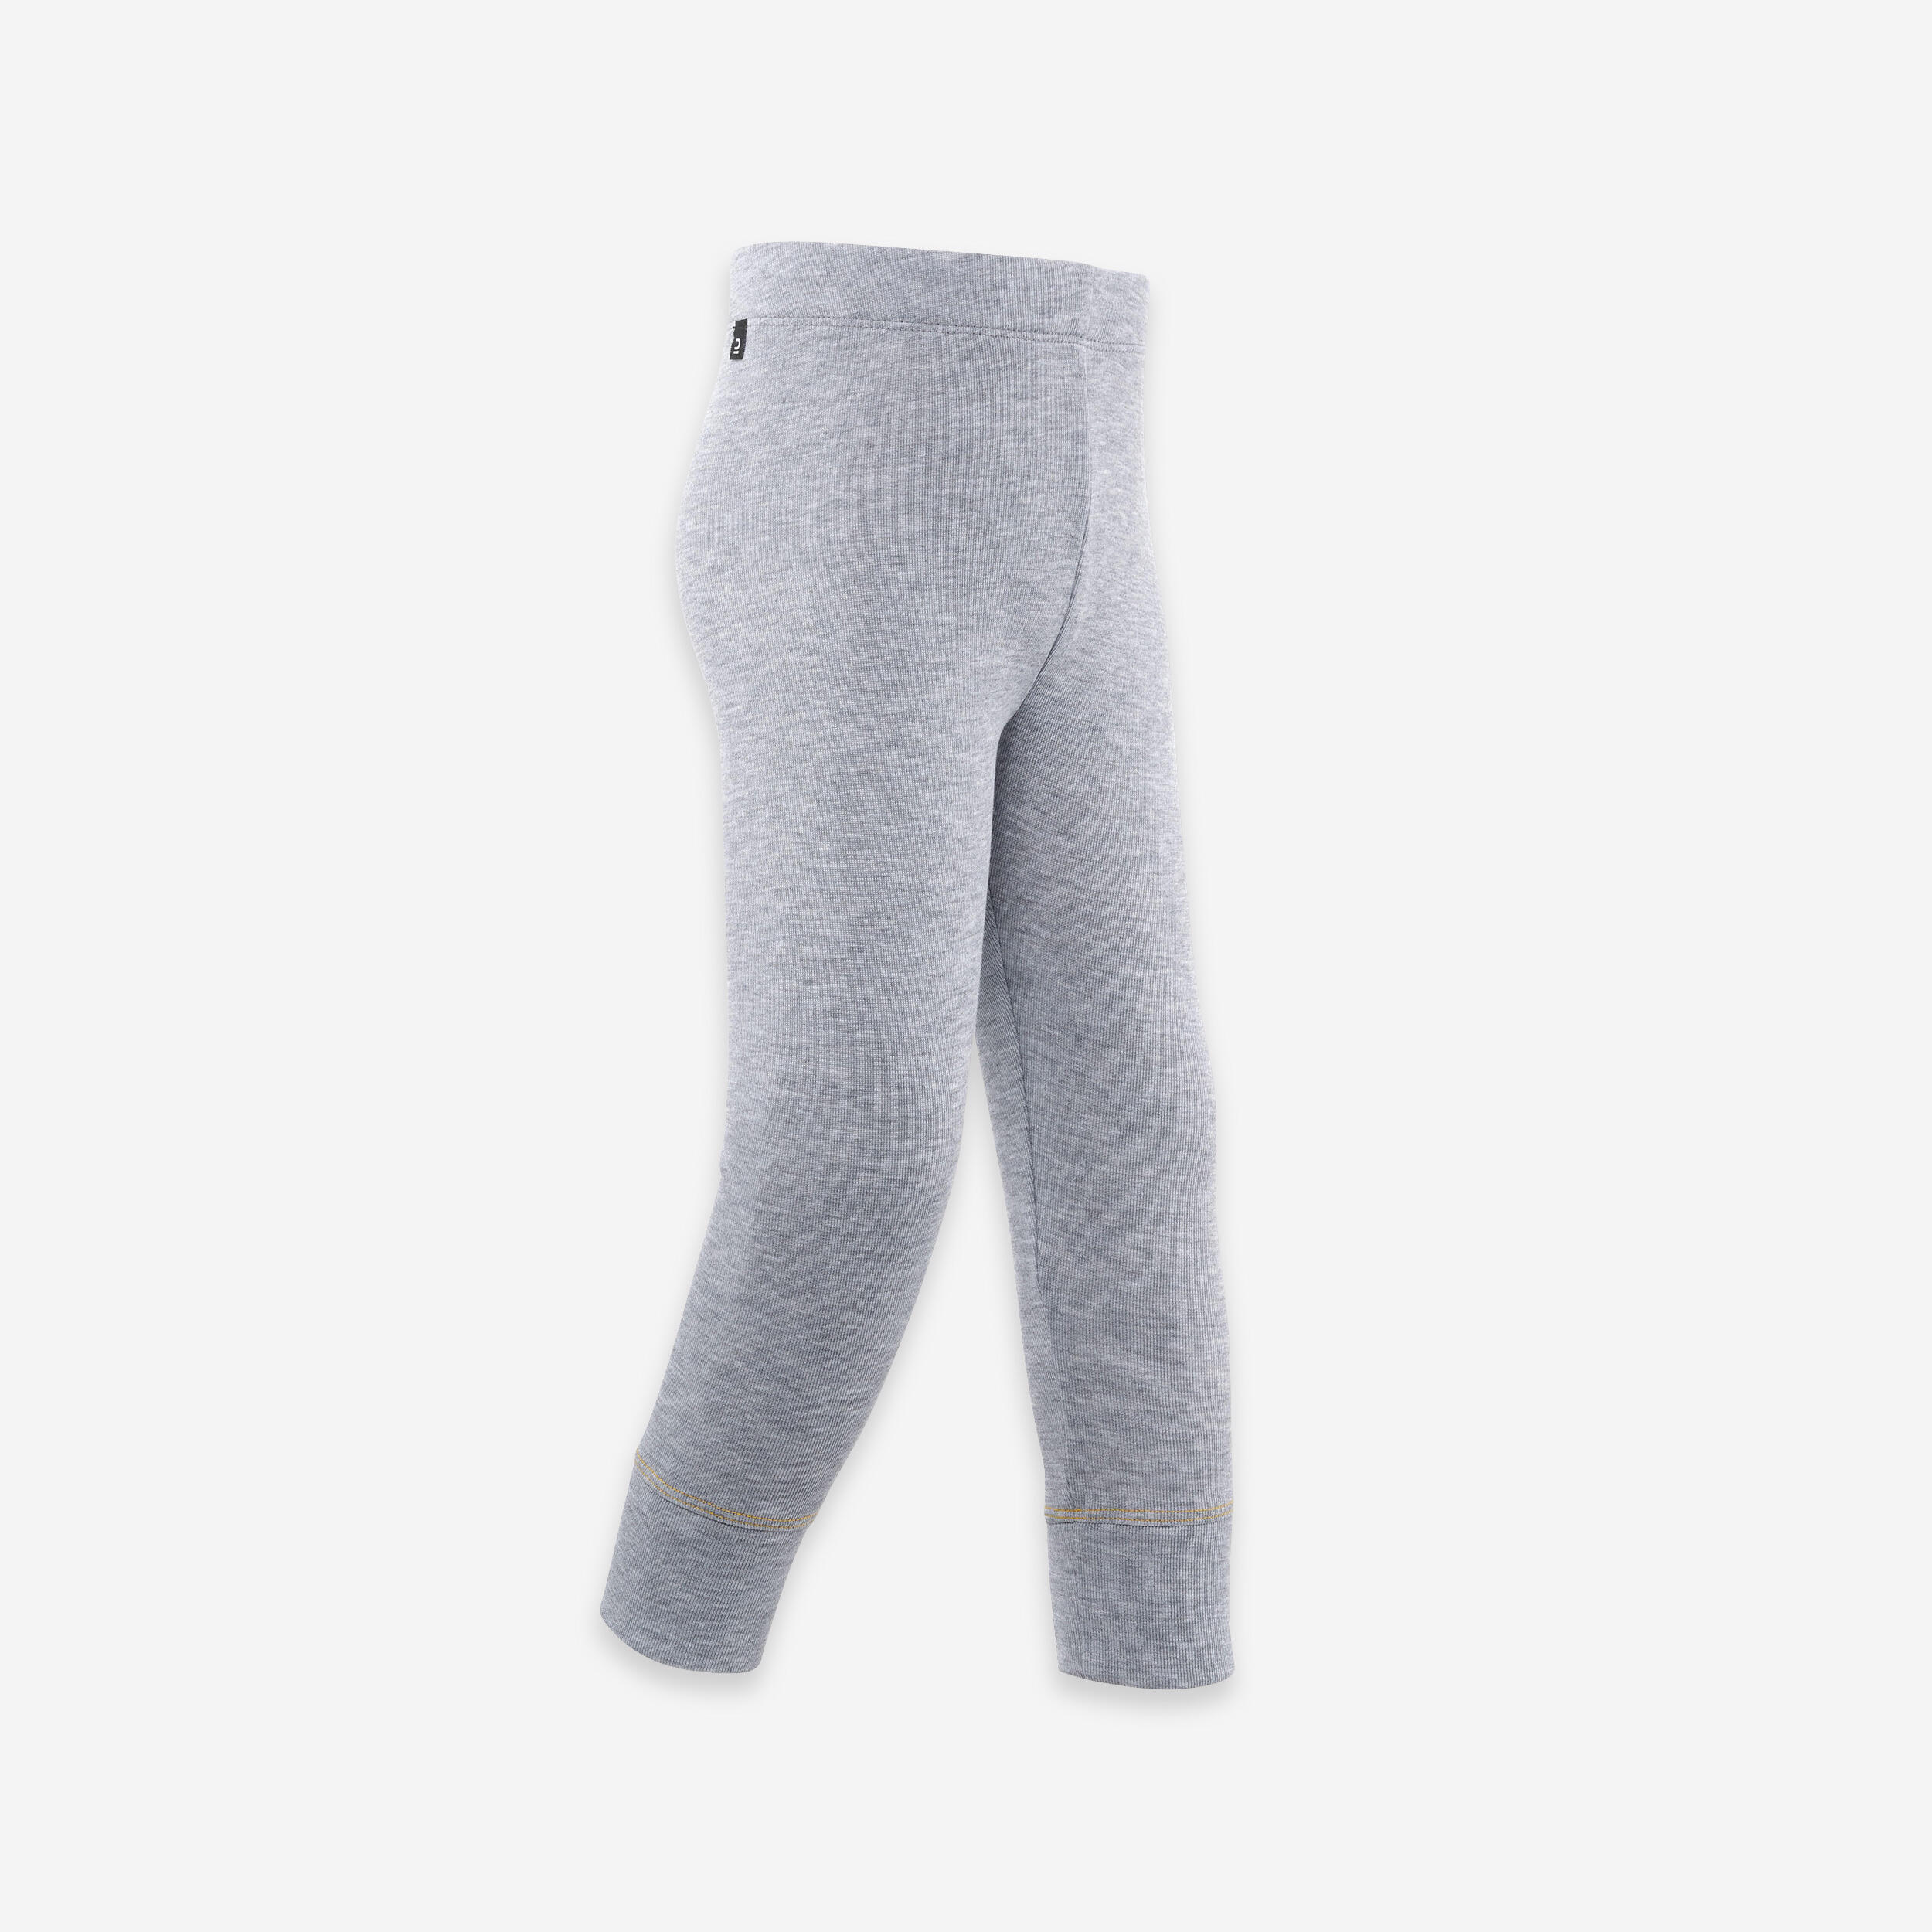 Base layer trousers, Baby ski leggings - WARM grey WEDZE